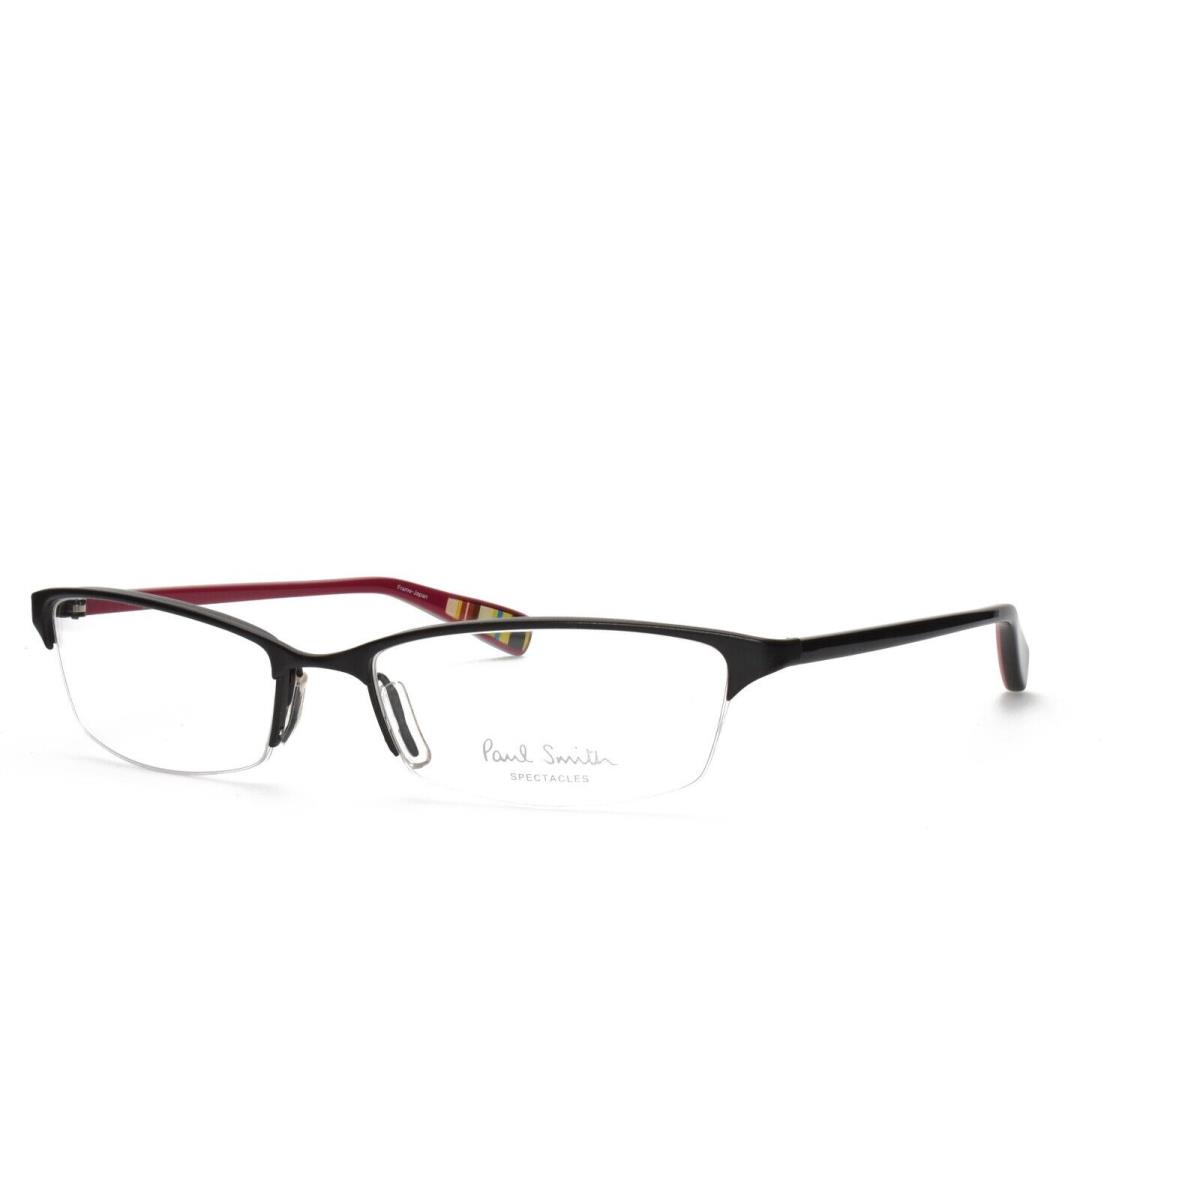 Paul Smith 186 OX 53-17-130 Black Vtg Vintage Eyeglasses Frames